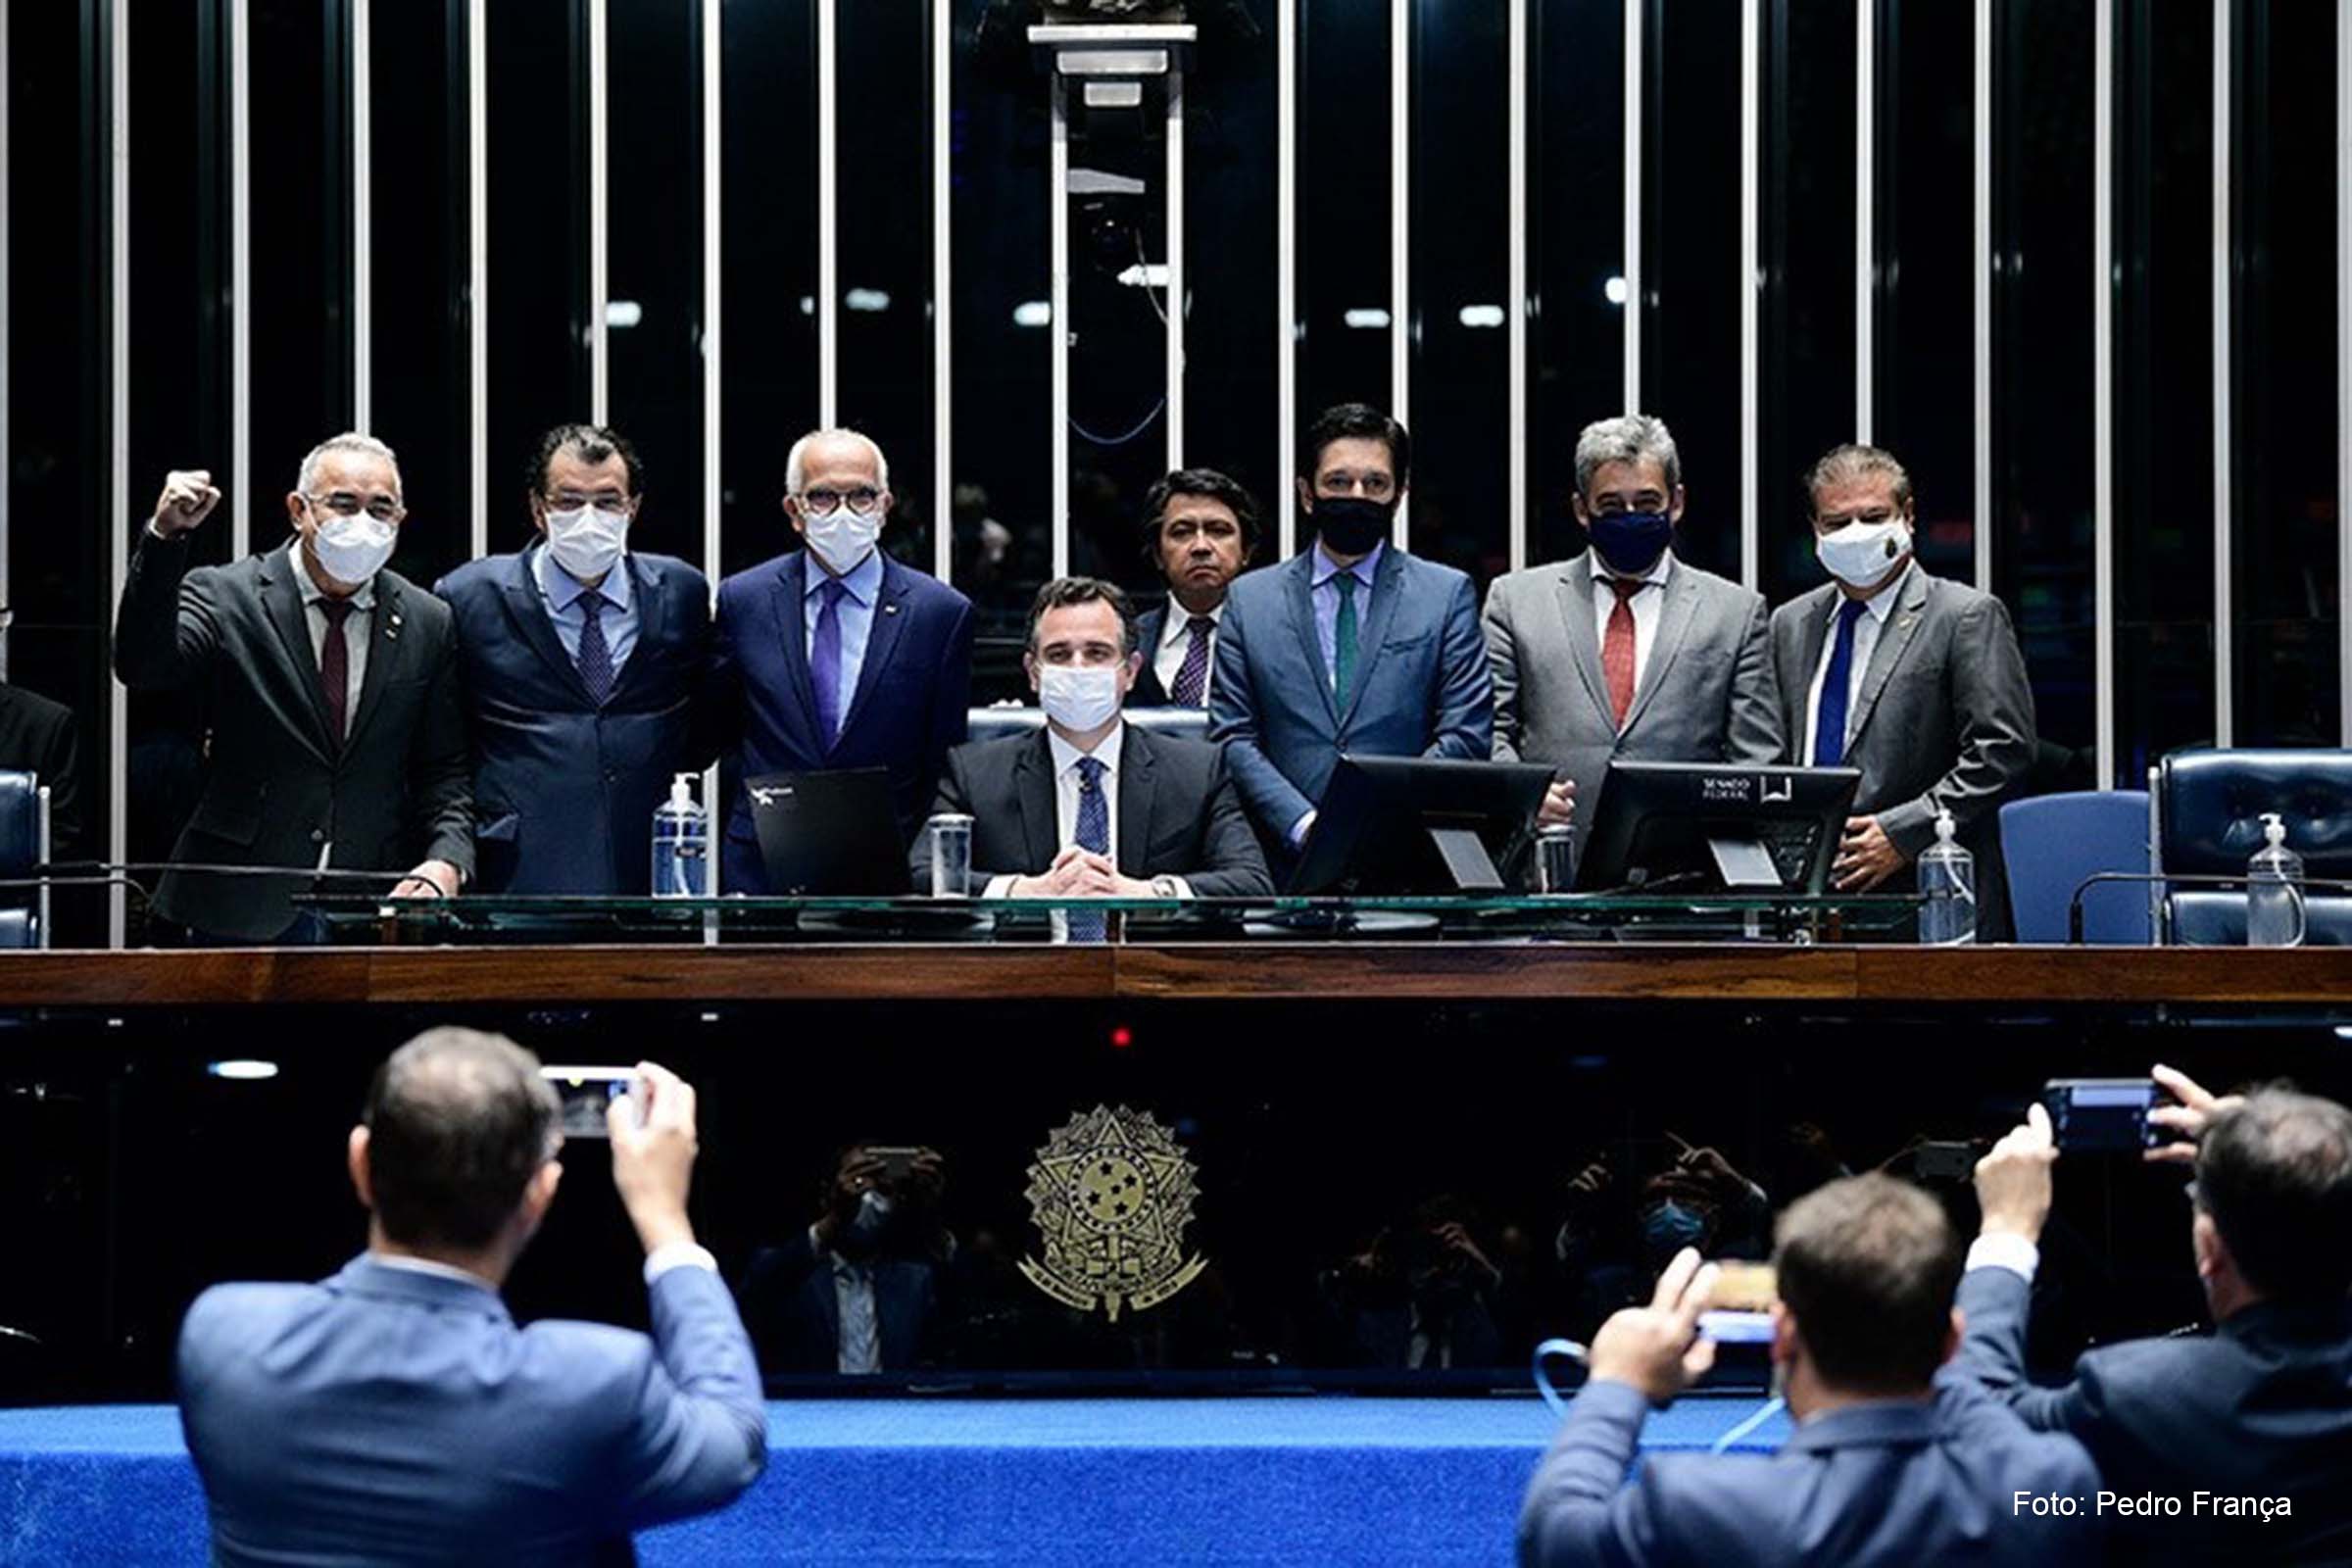 Senadores e prefeitos de capitais junto ao presidente da Casa, Rodrigo Pacheco